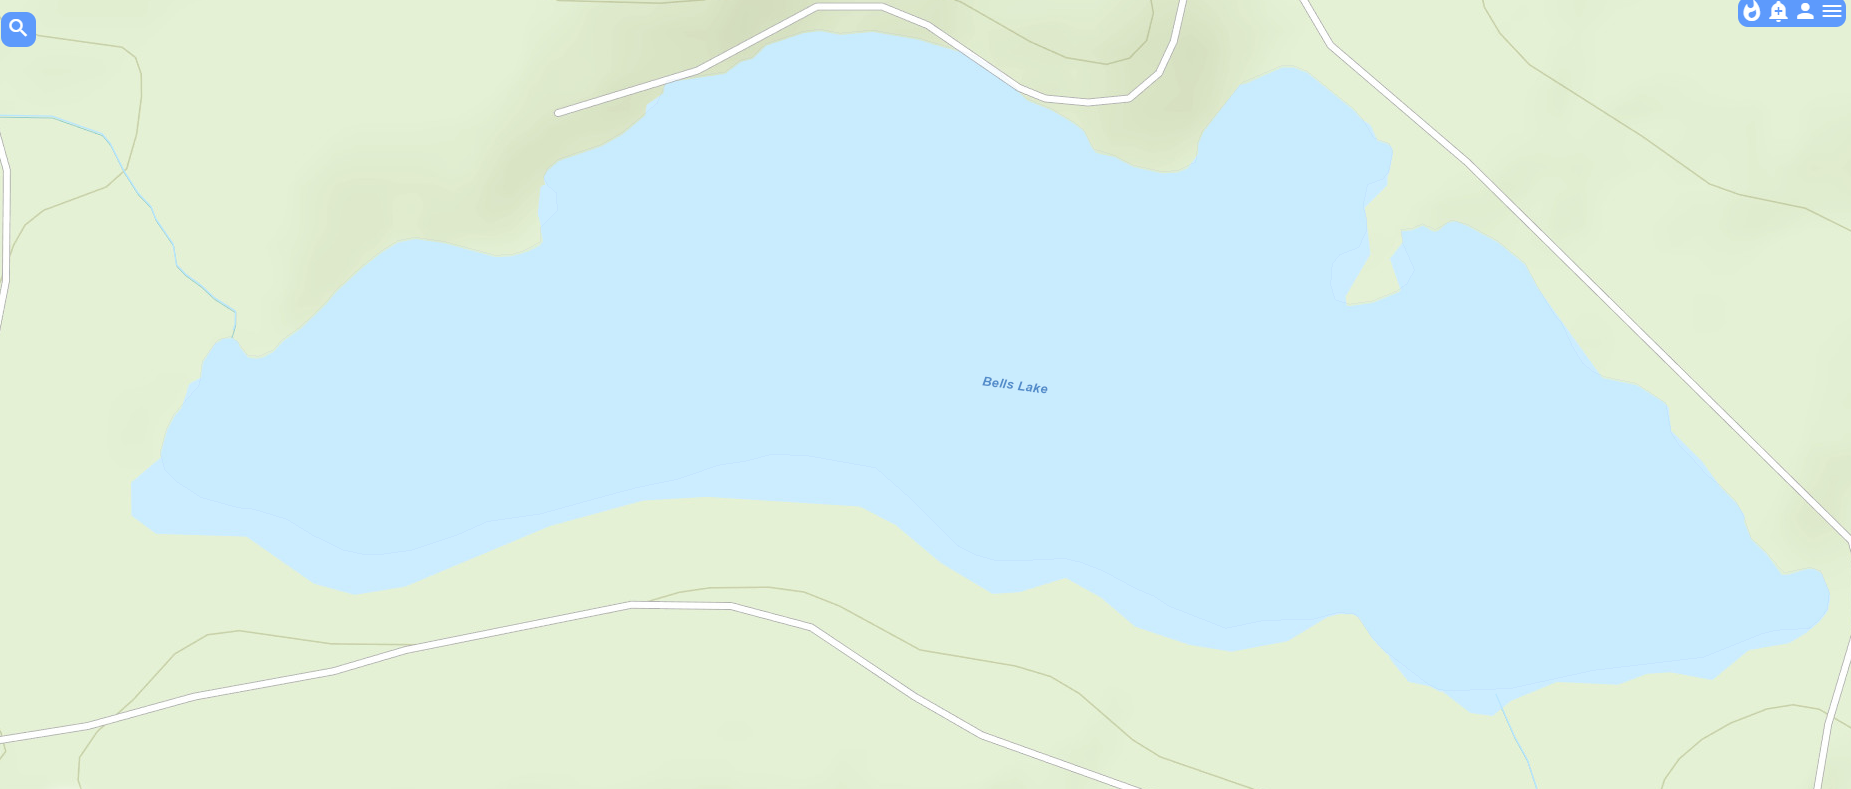 Bells Lake Cadastral Map - Bells Lake - Muskoka